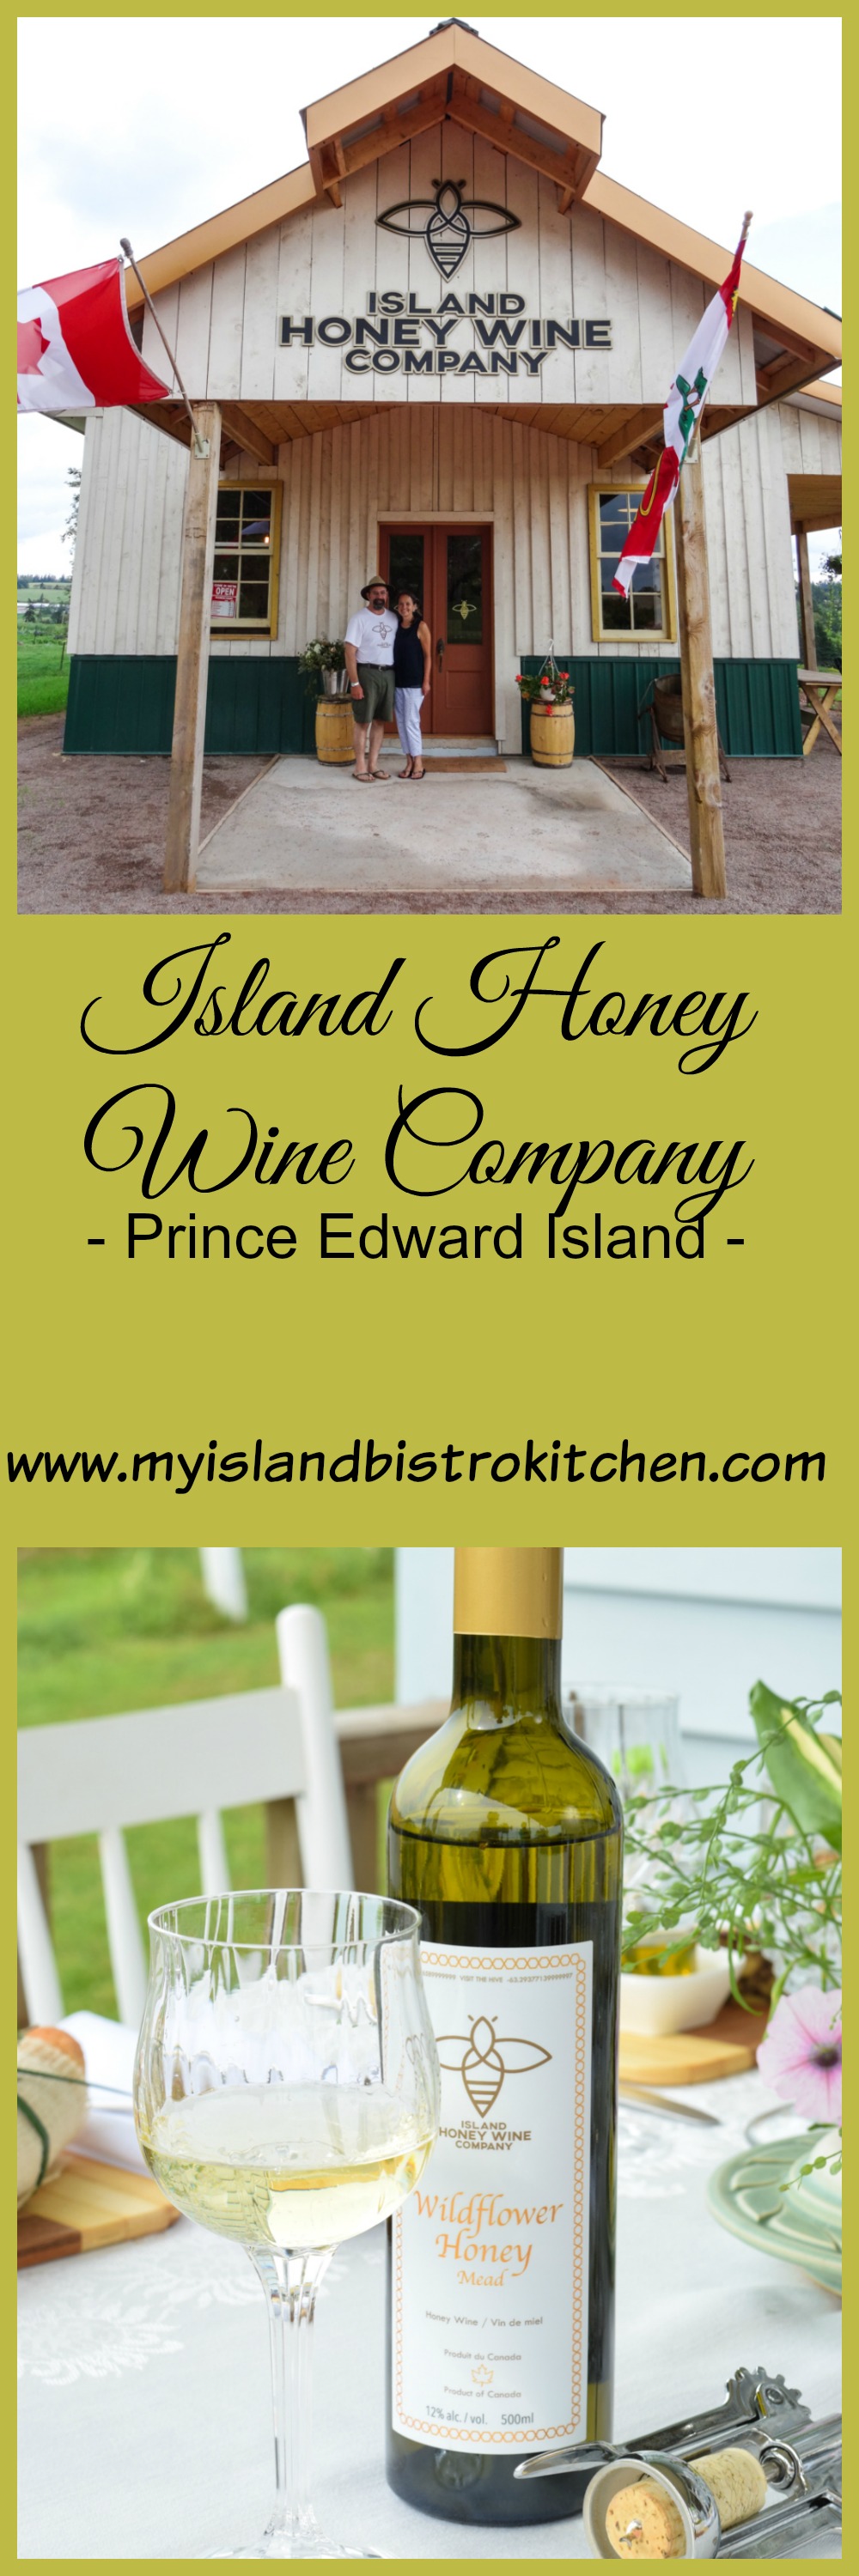 Island Honey Wine Company, Wheatley River, PEI